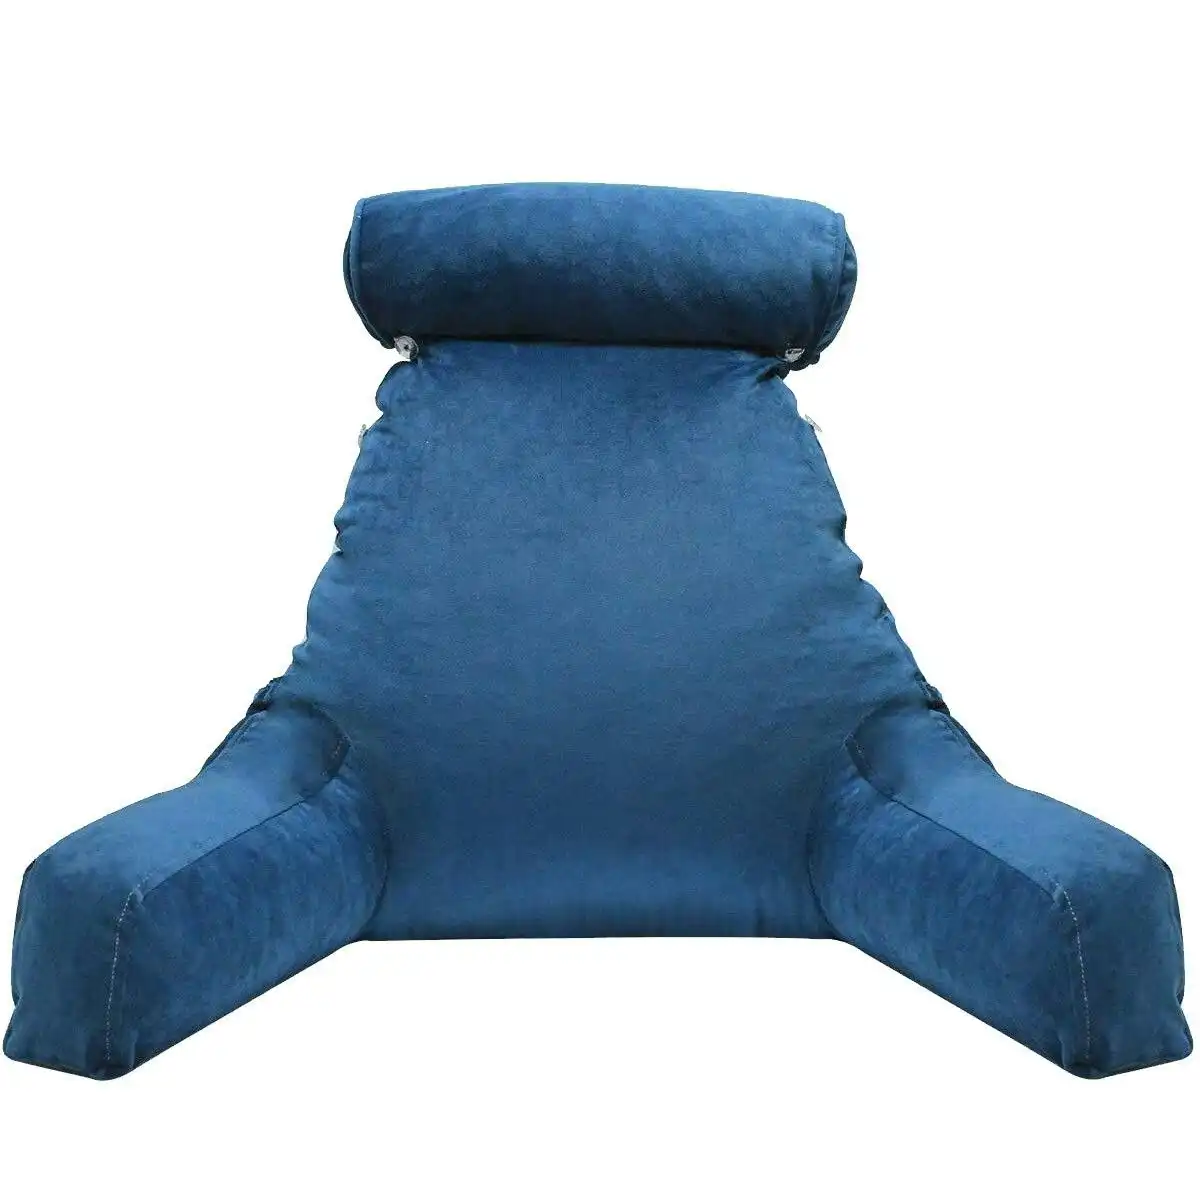 Ausway Husband Pillow Bed Reading Cushion Backrest Detachable Neck Roll Shredded Memory Foam Navy Blue